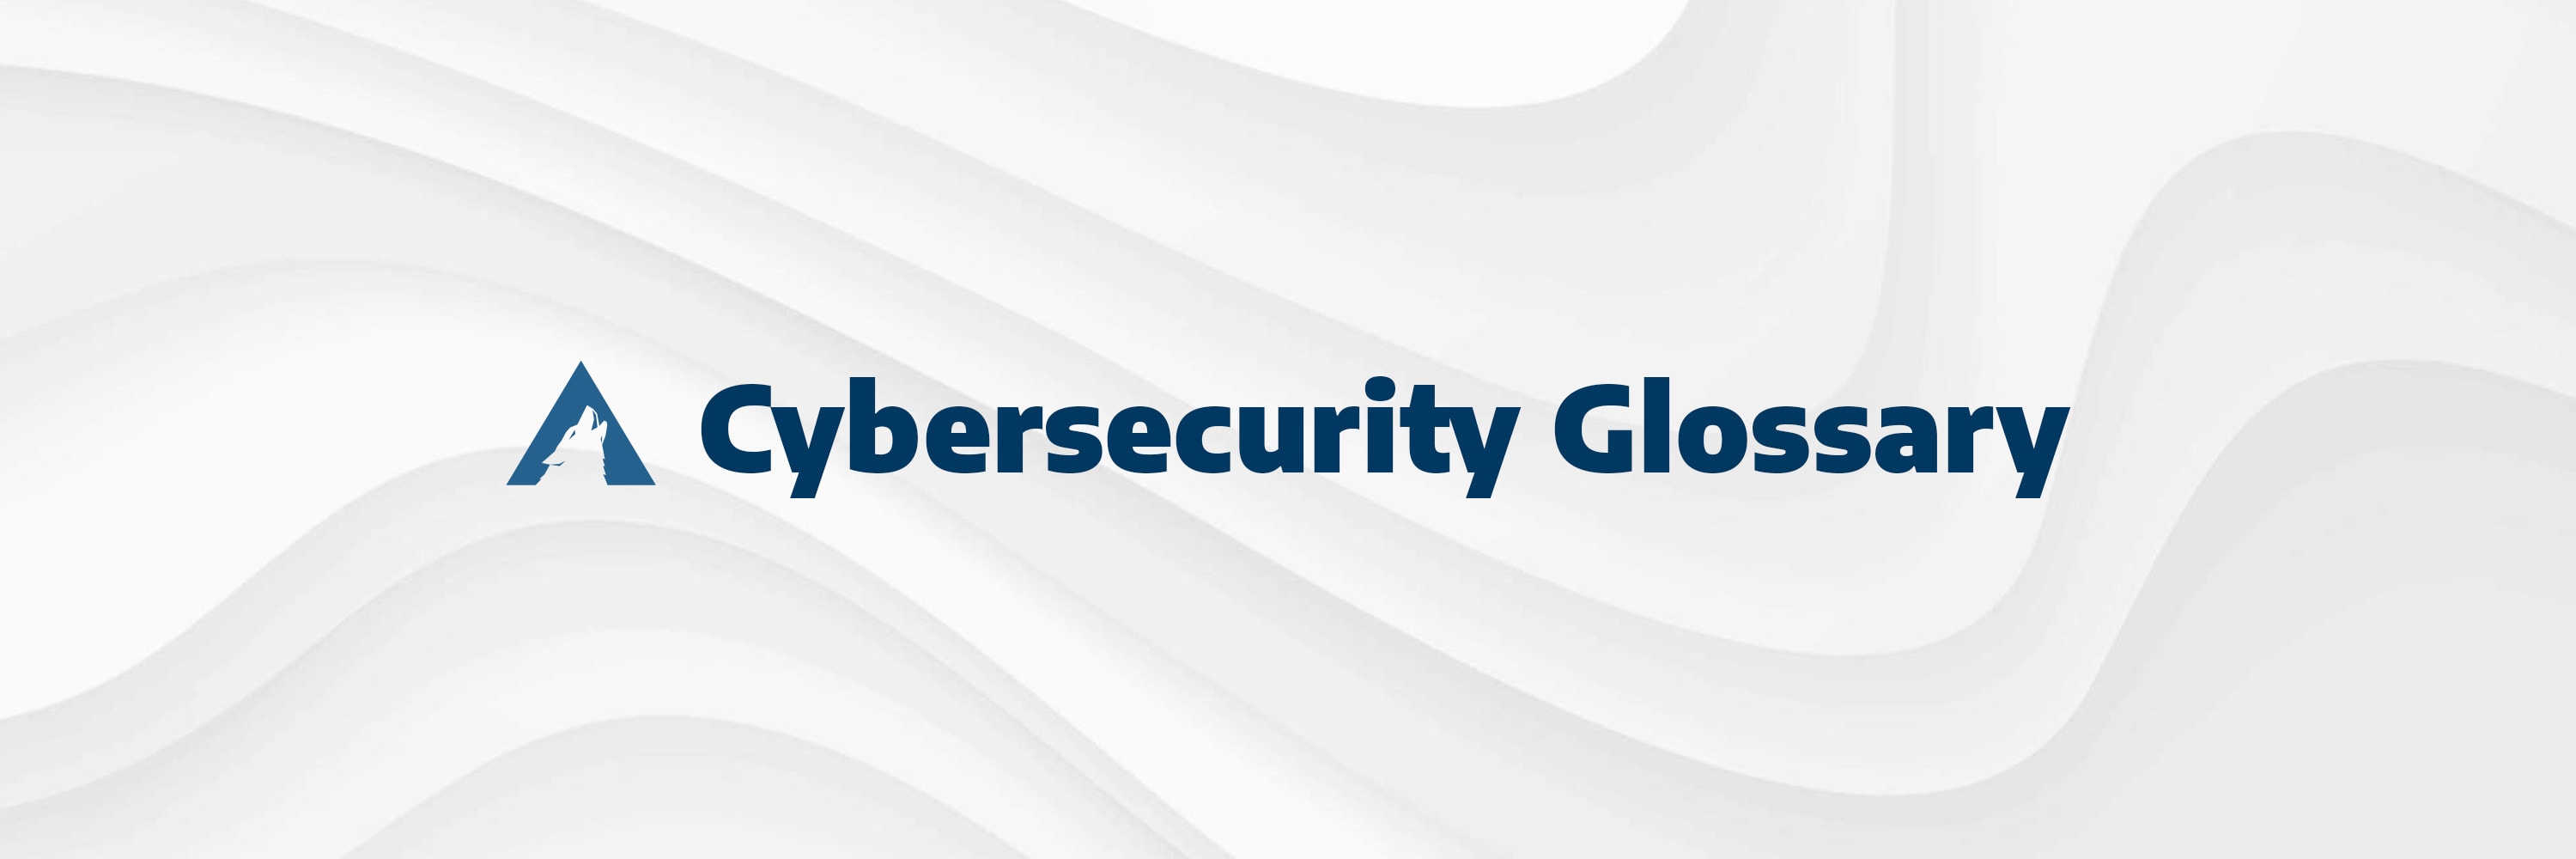 CybersecurityGlossary.jpg